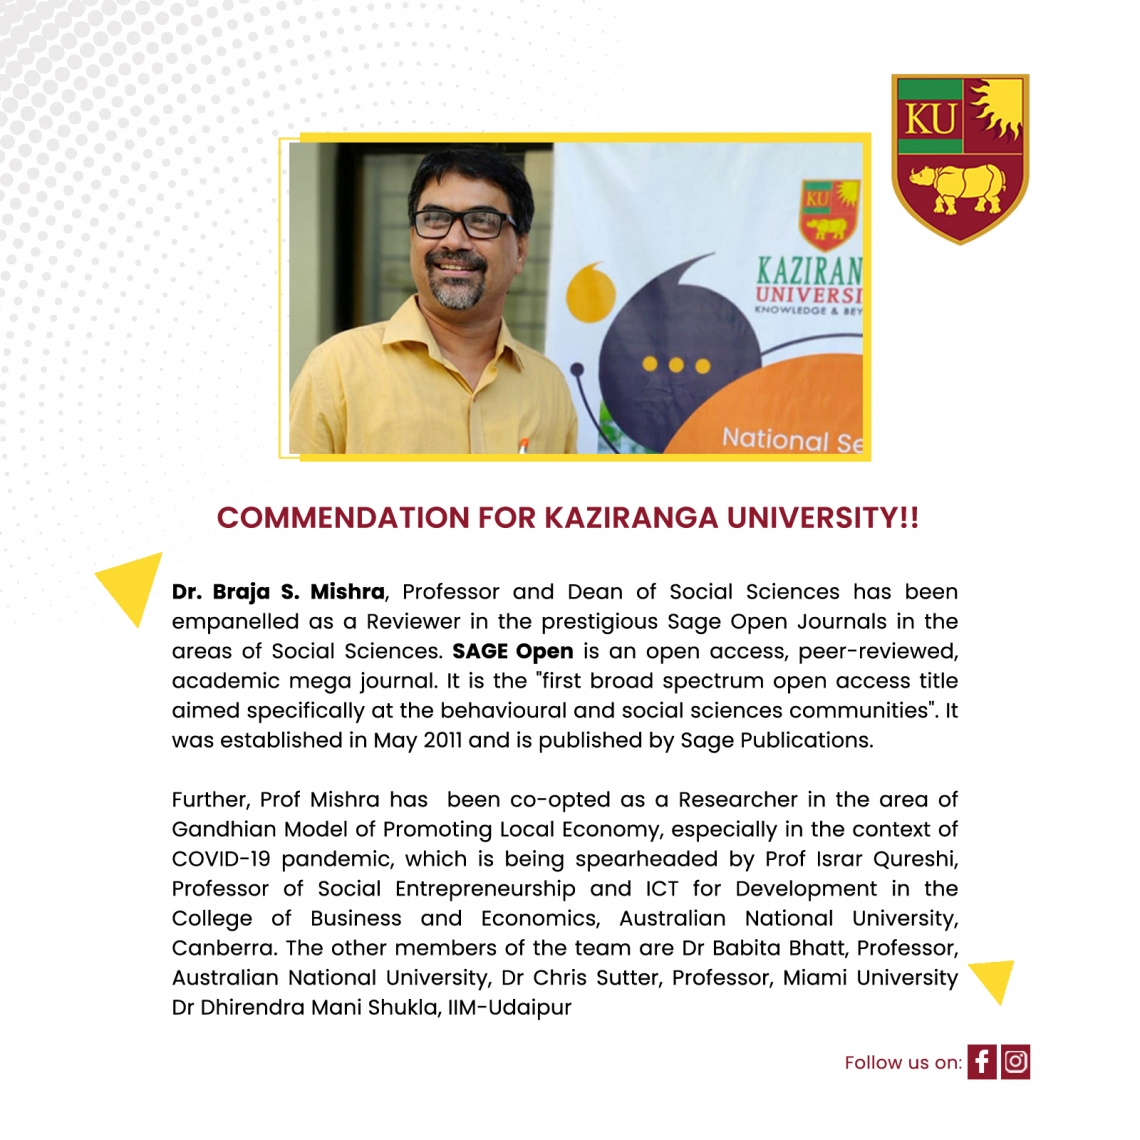 Commendation for Kaziranga University